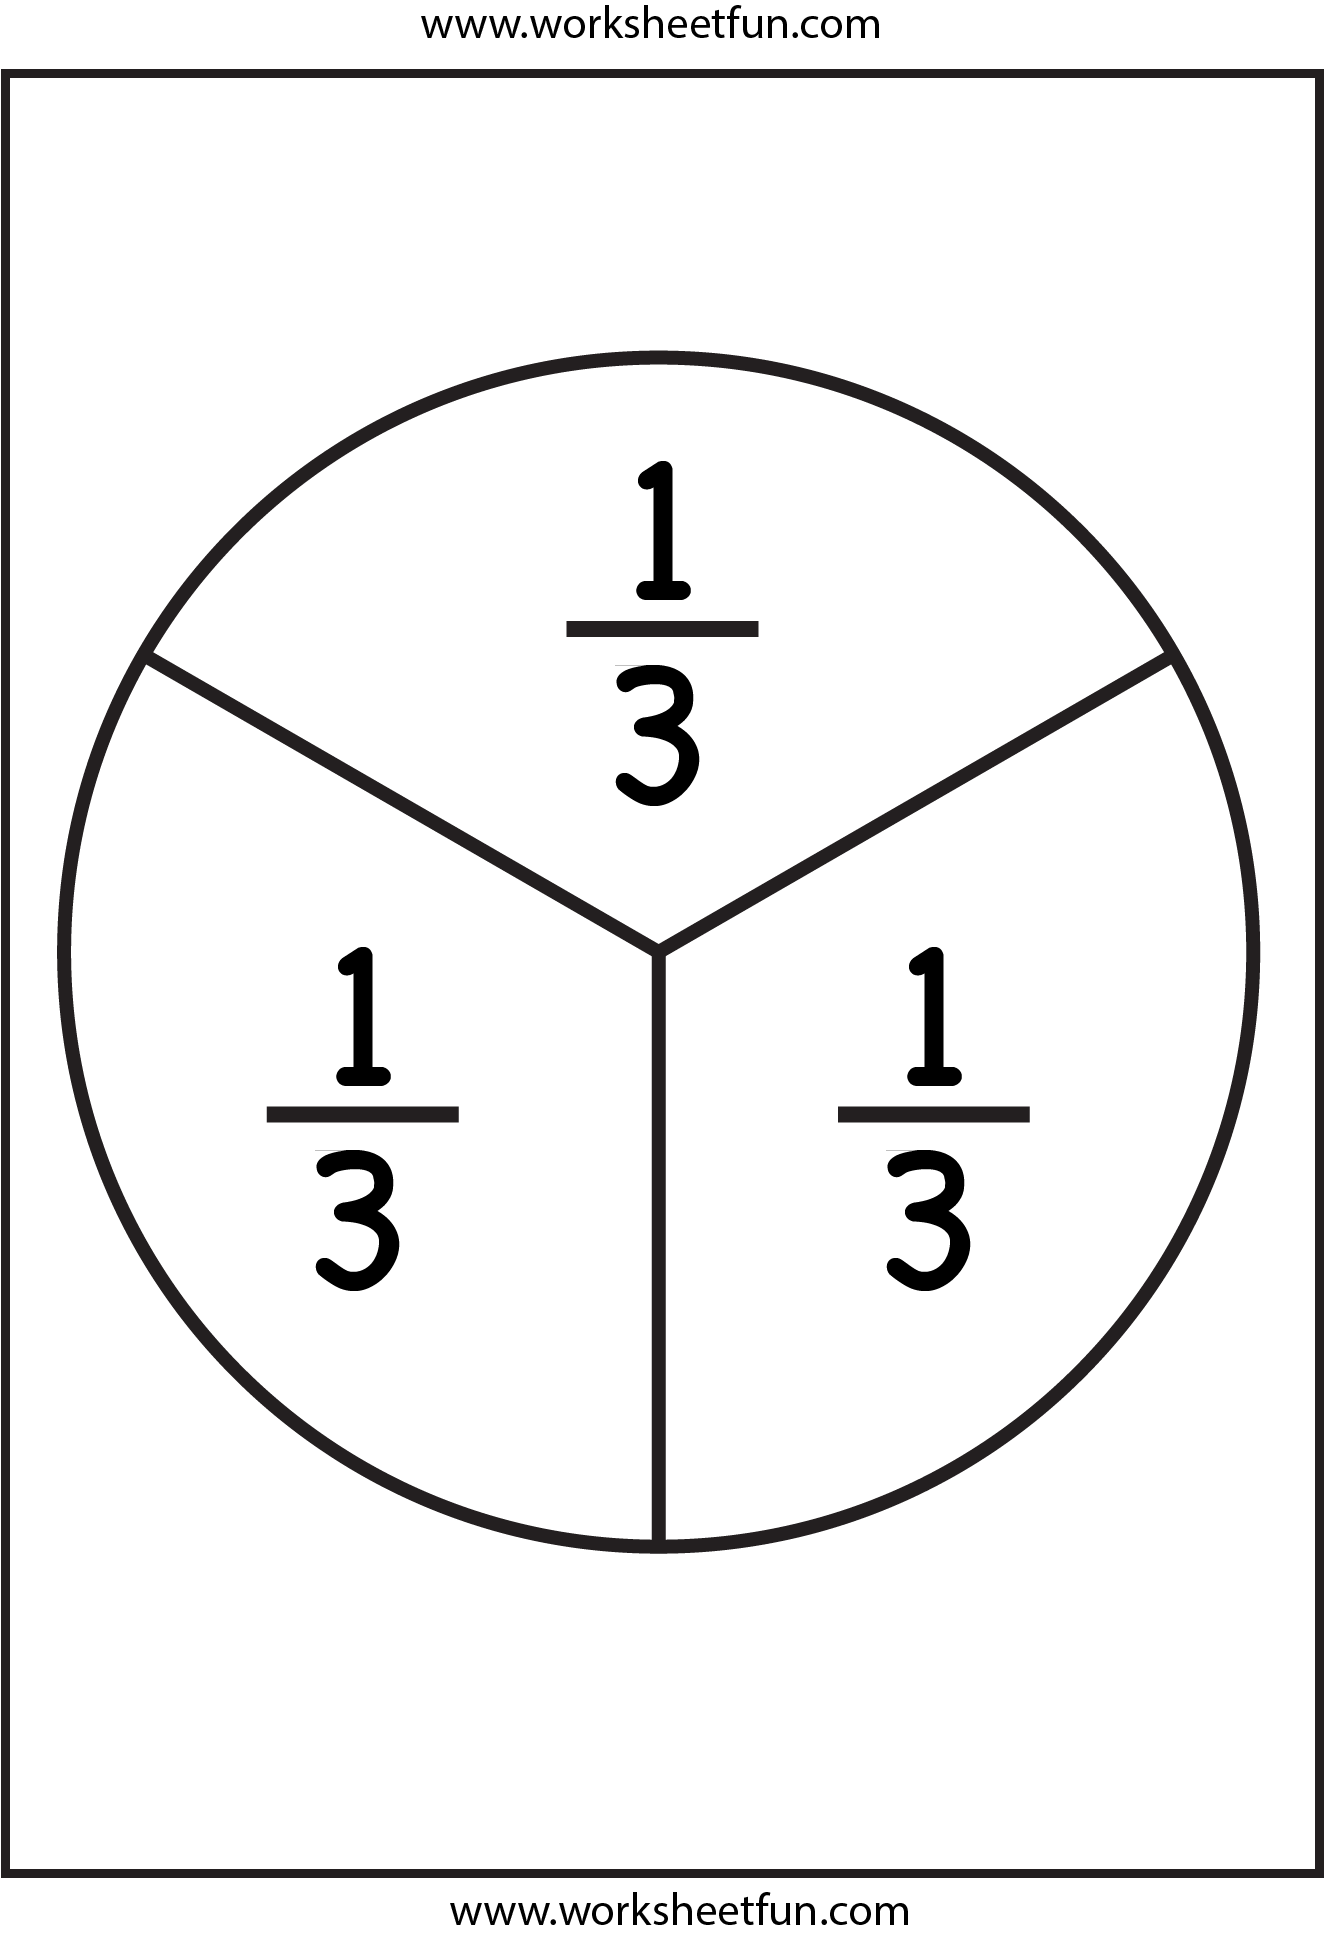 Fraction Circles Template Printable Fraction Circles 11 Worksheets